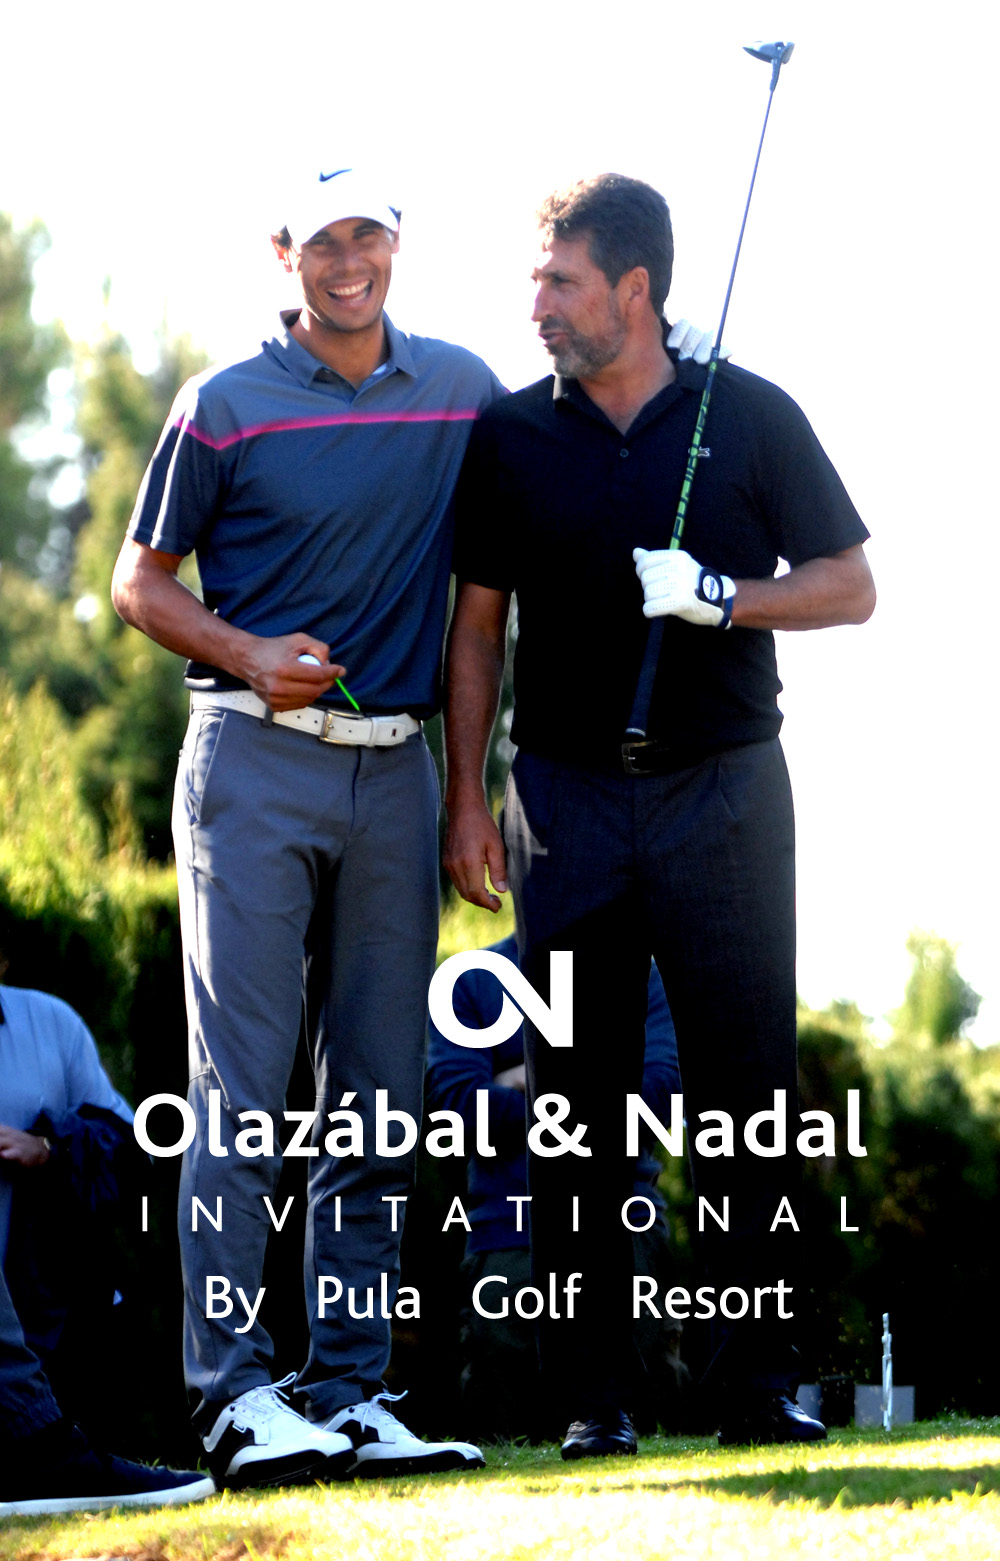 torneo de golf Olazabal & Nadal